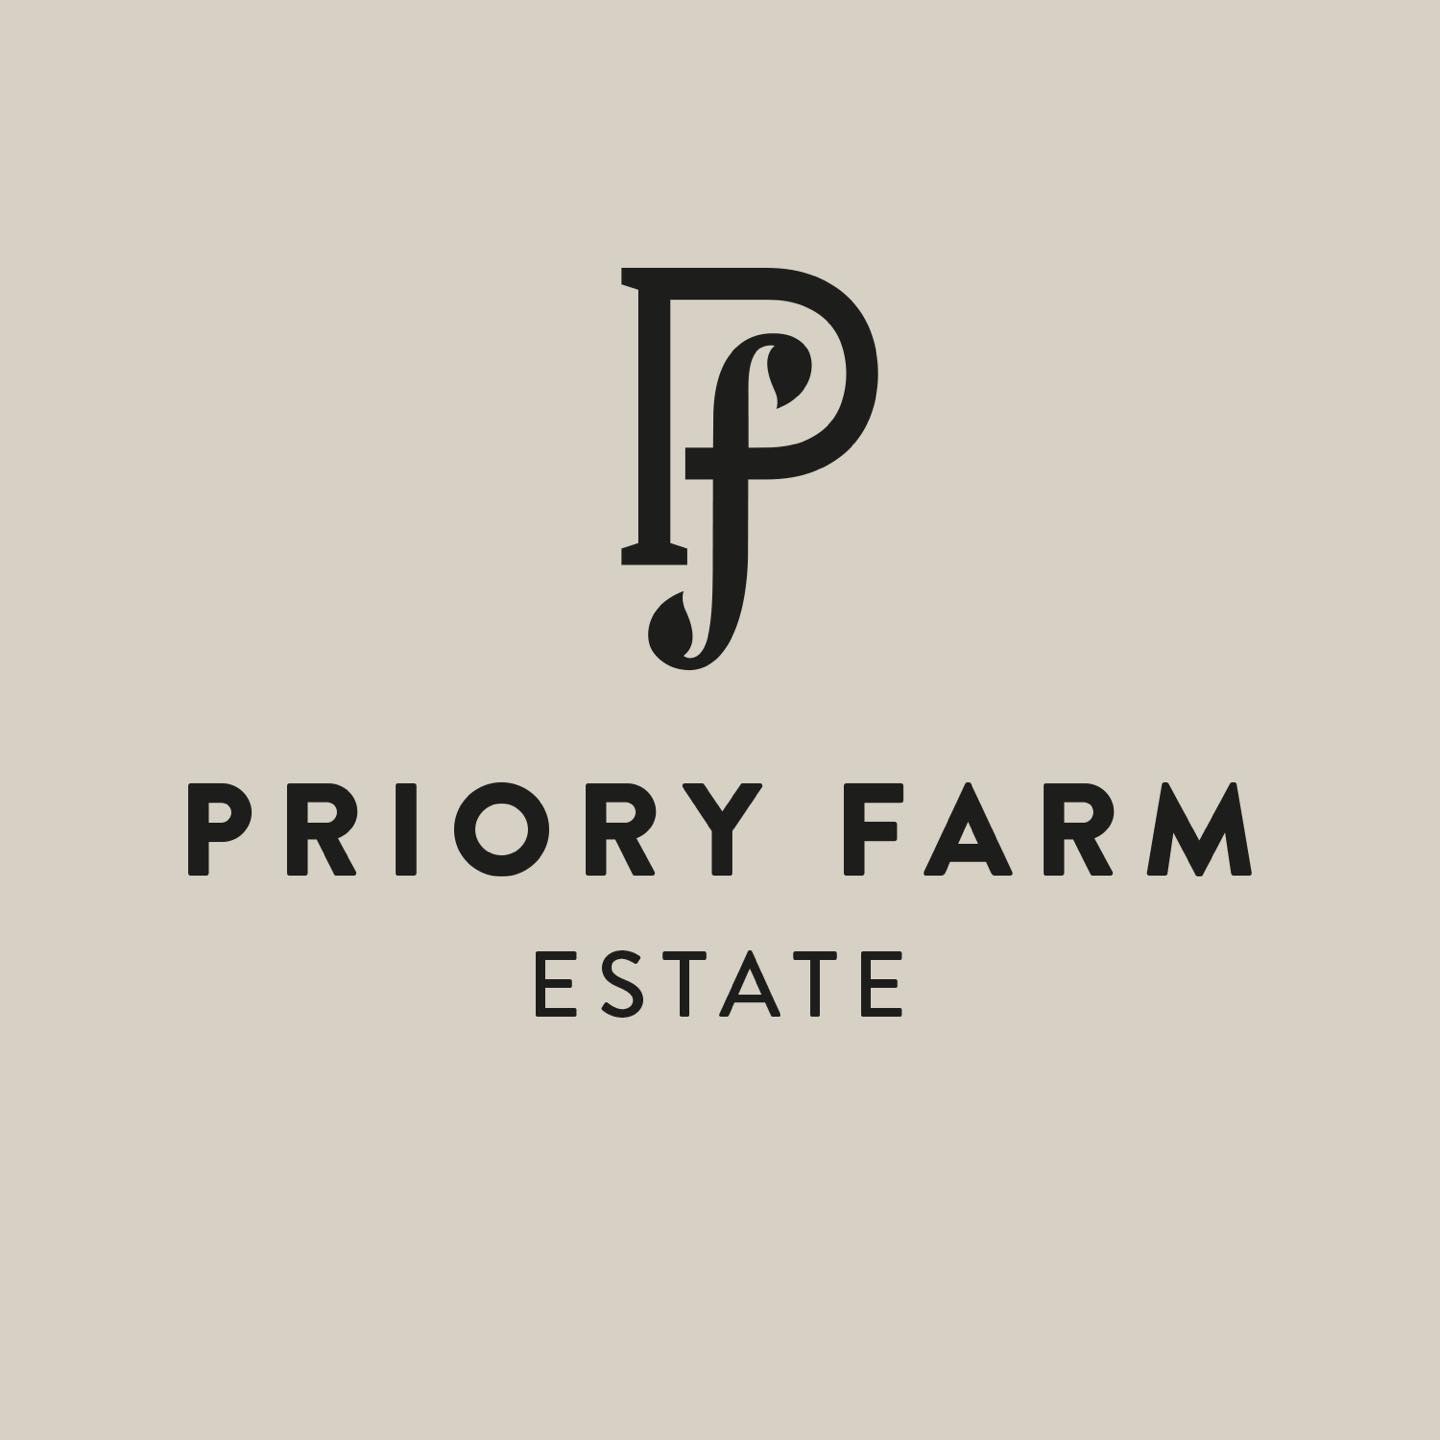 Priory Farm Shop in 